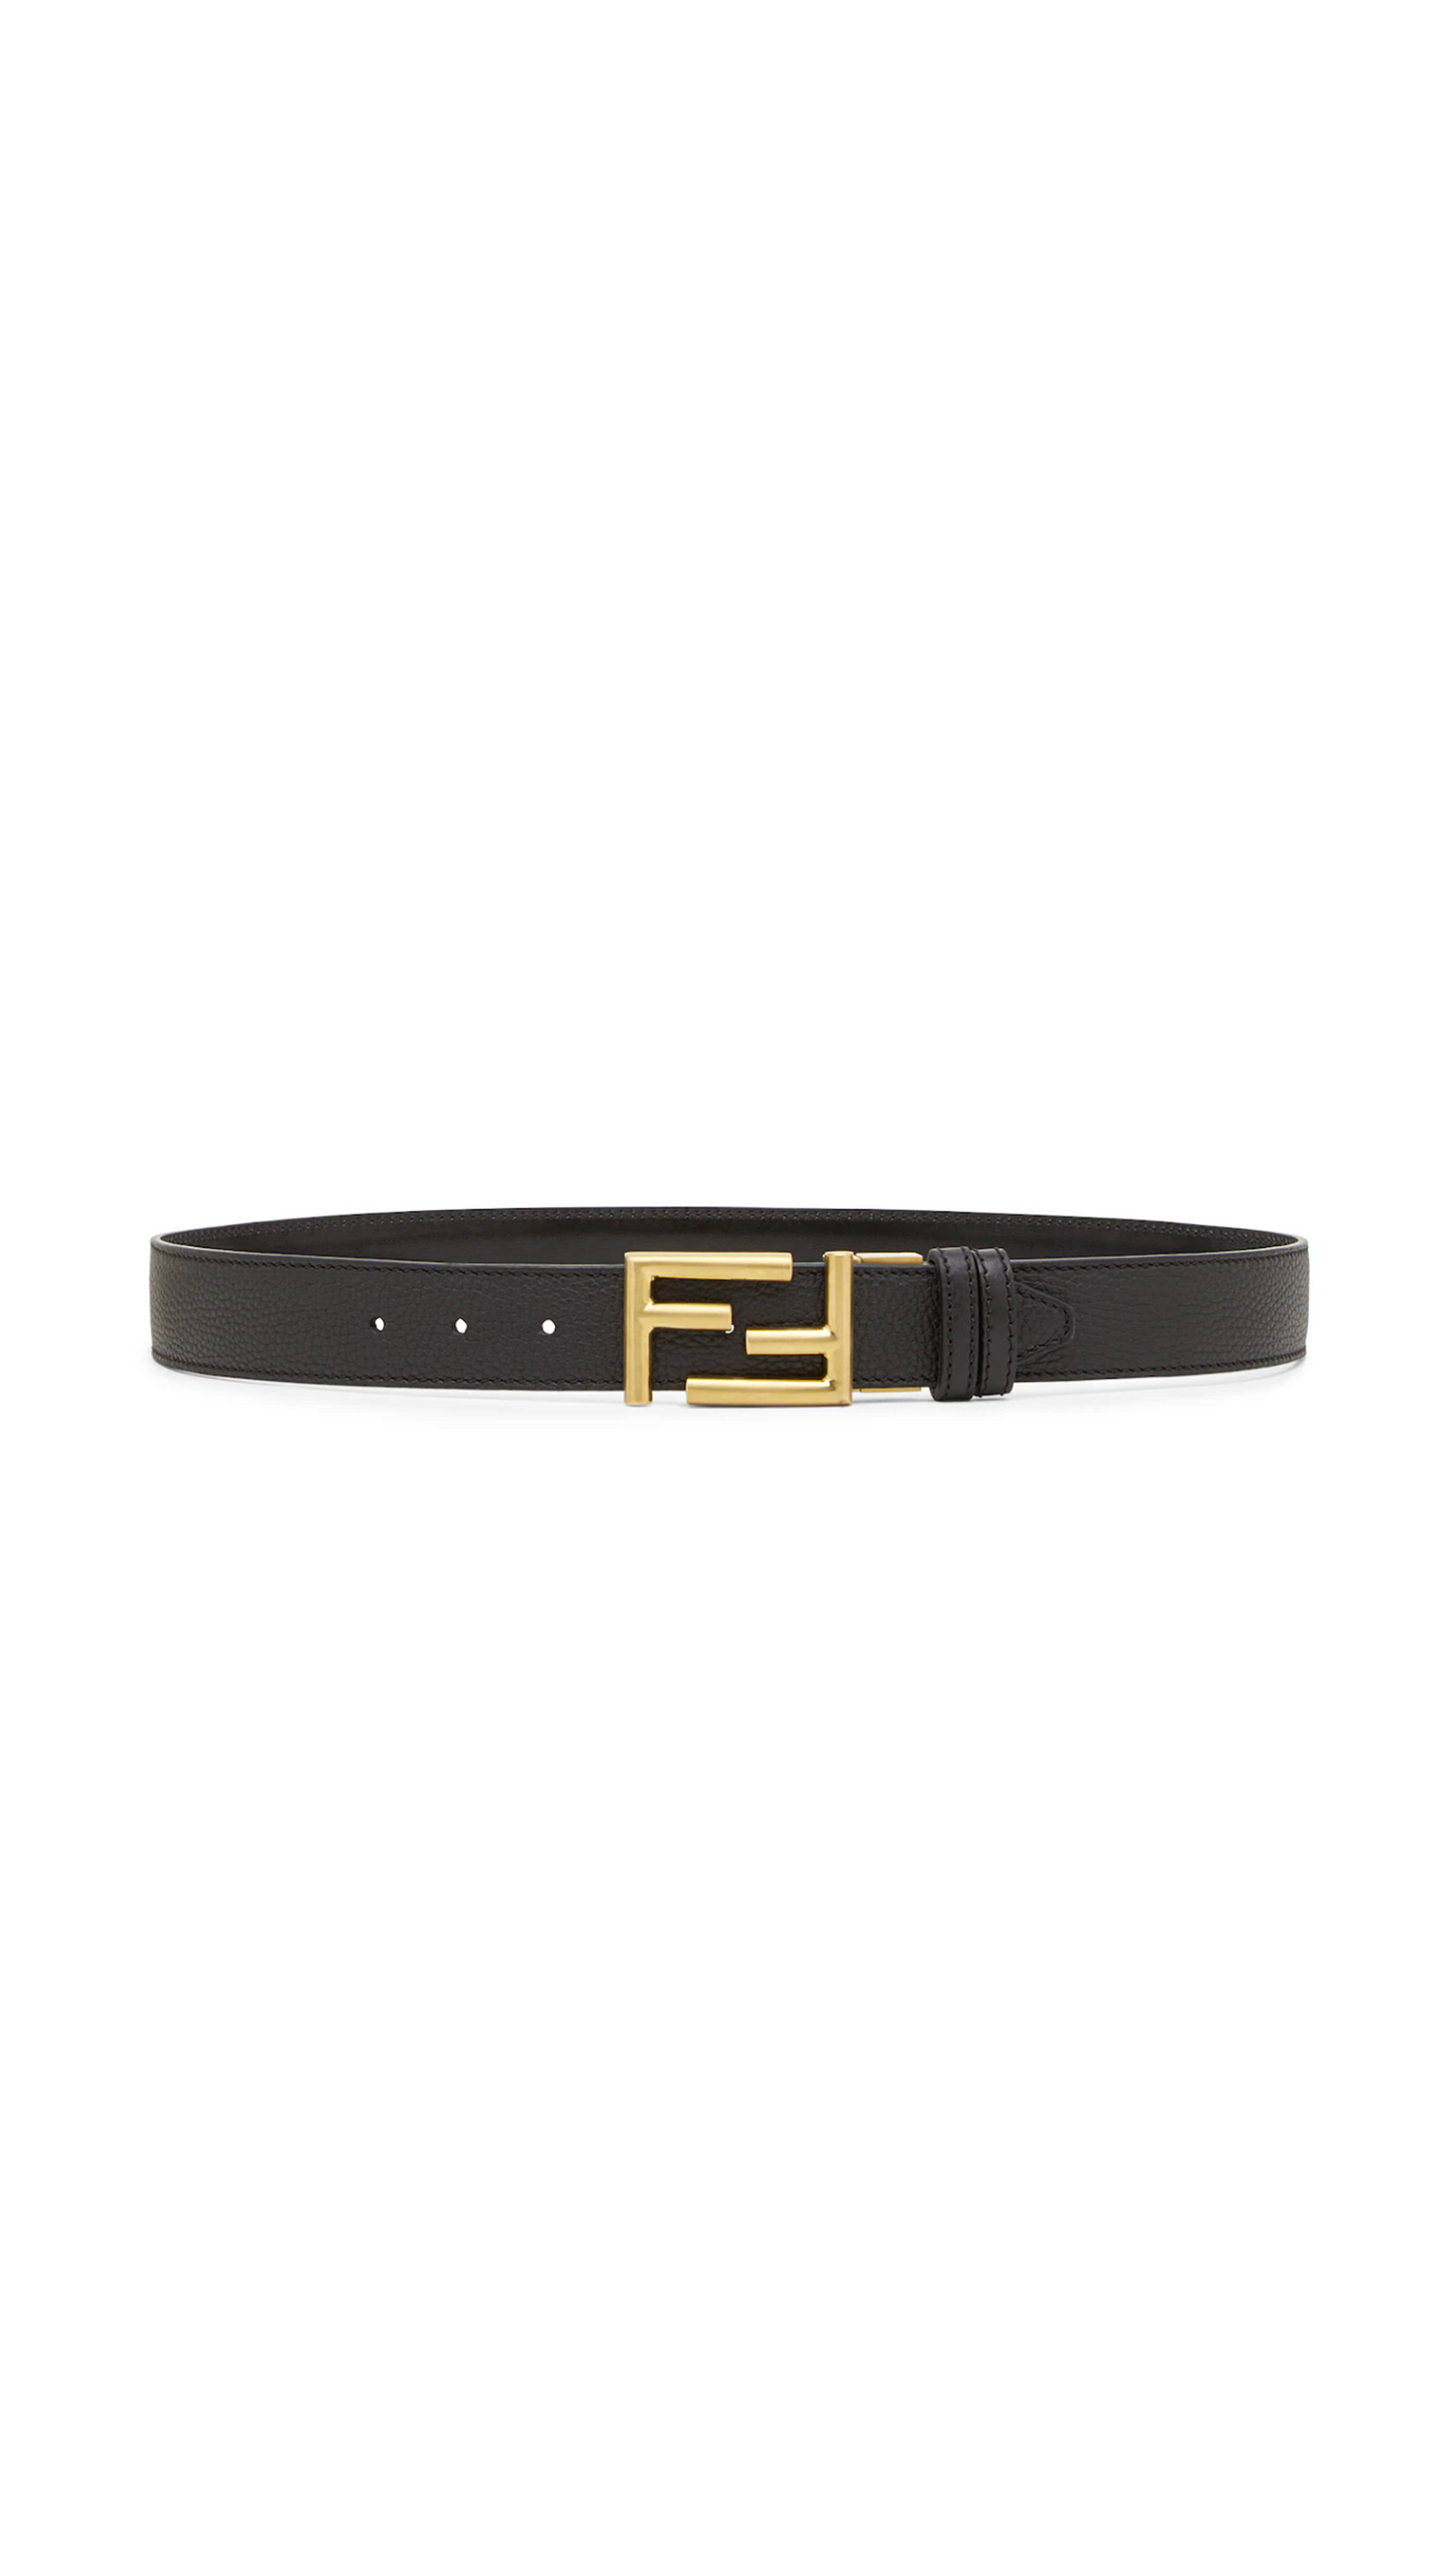 Roman Leather Belt - Black/Gold